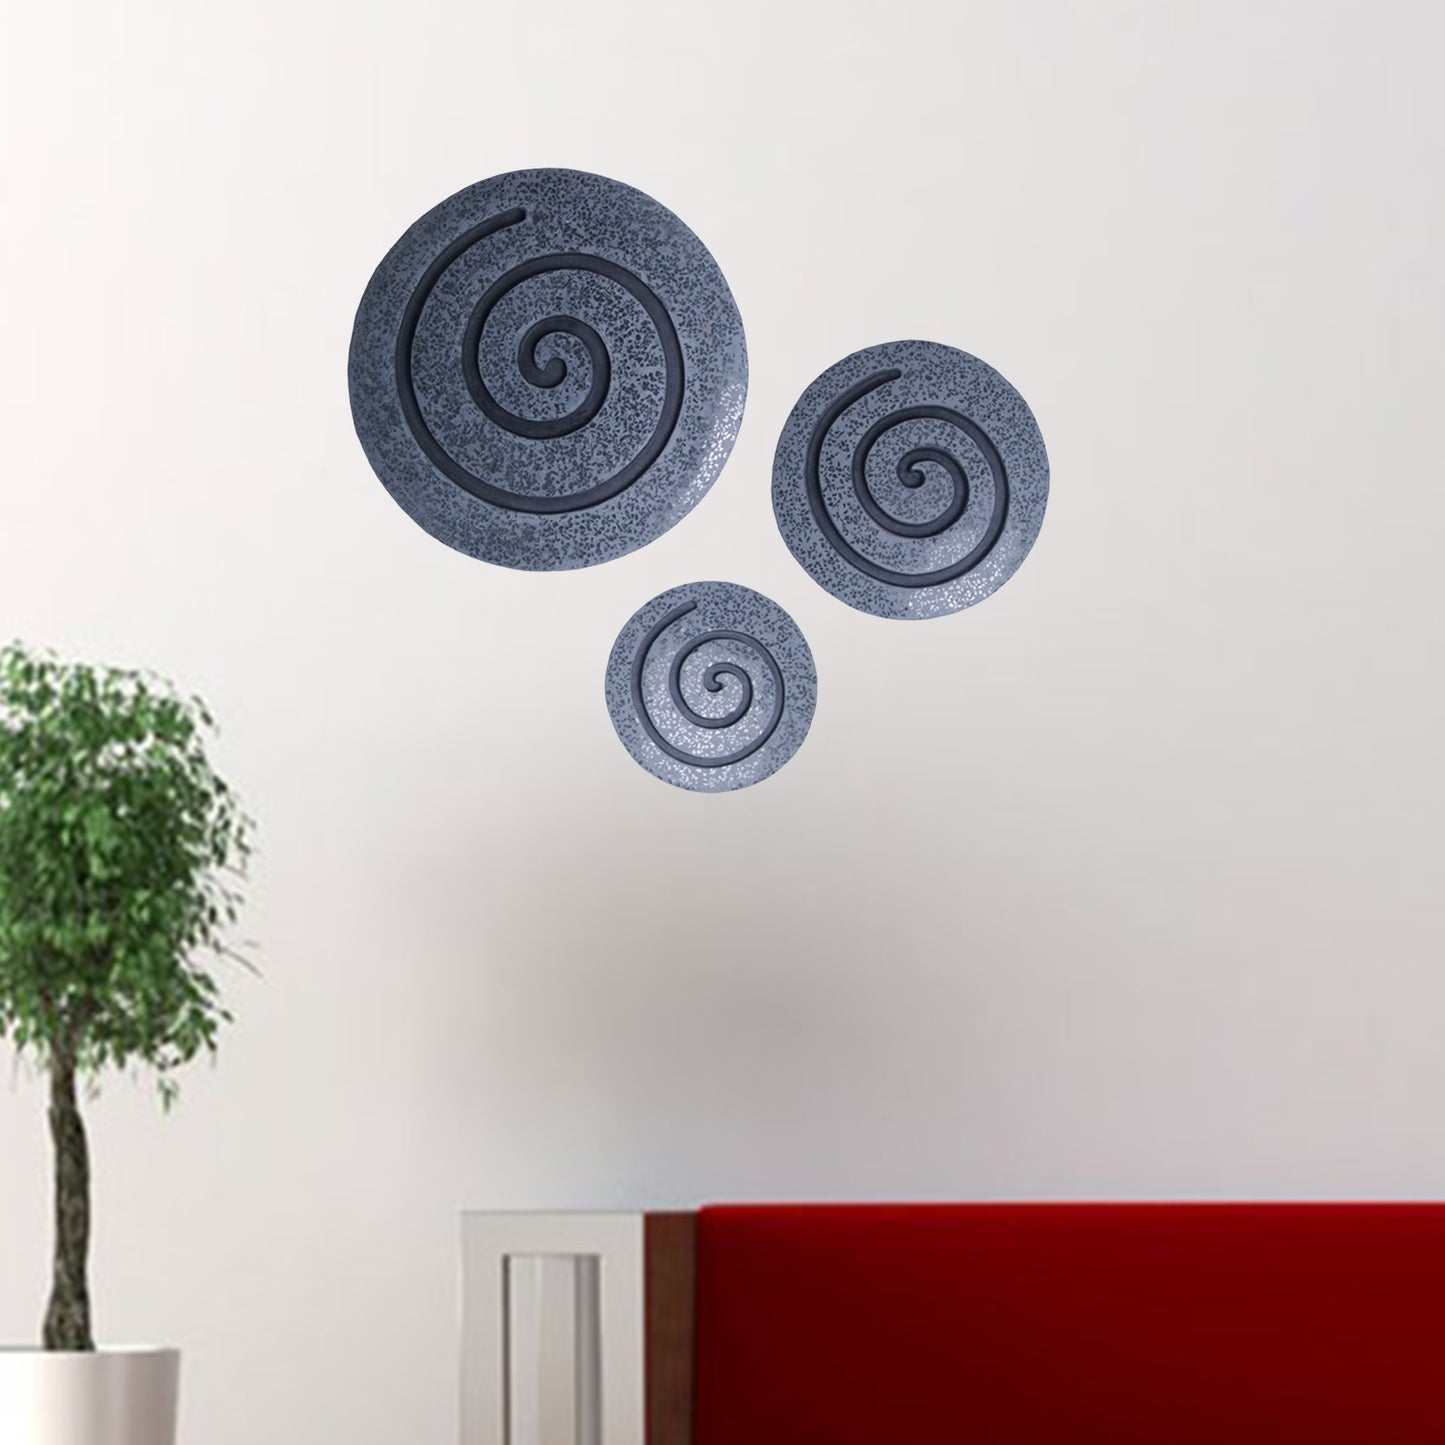 14" X 14" X 2" Gray Round Modern Spiral Wall Art